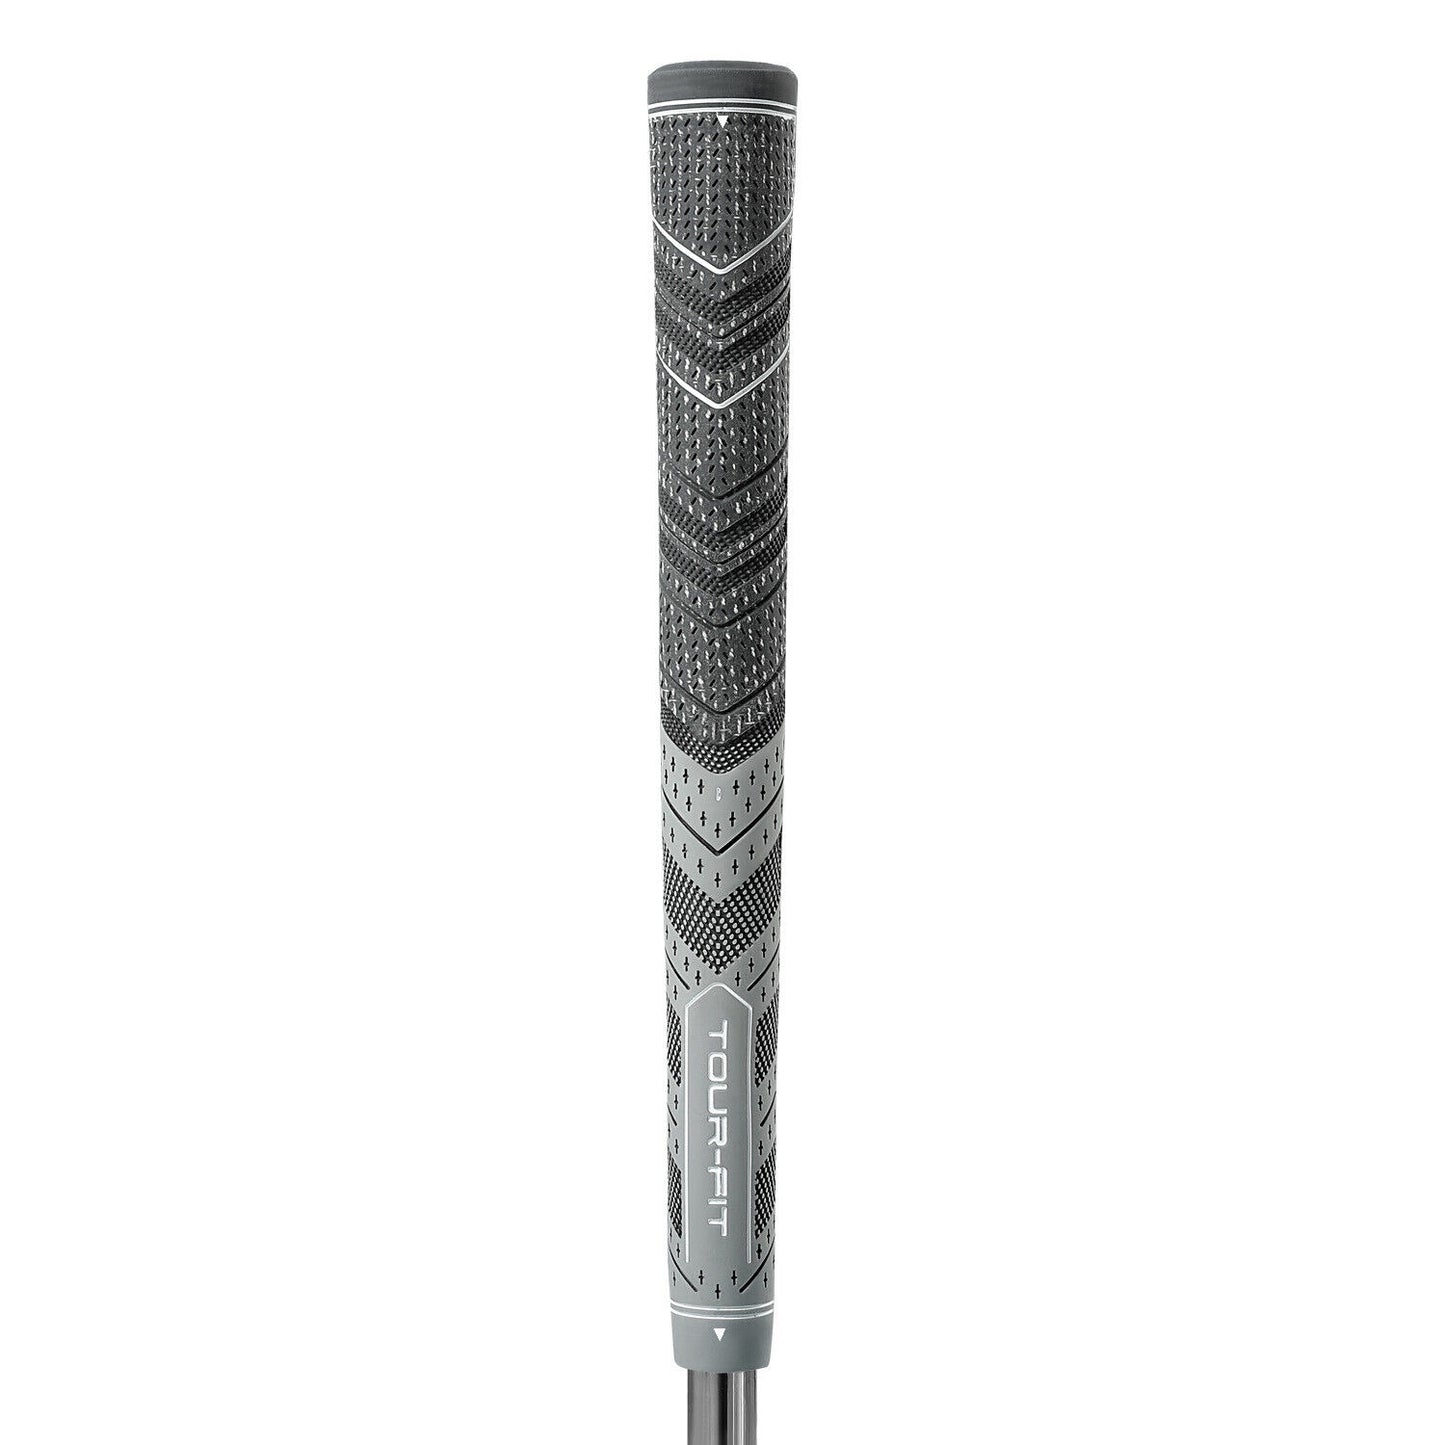 Tour Fit Dual Compound Golf Grip Premium Half Cord Standard Midsize Golf Grips